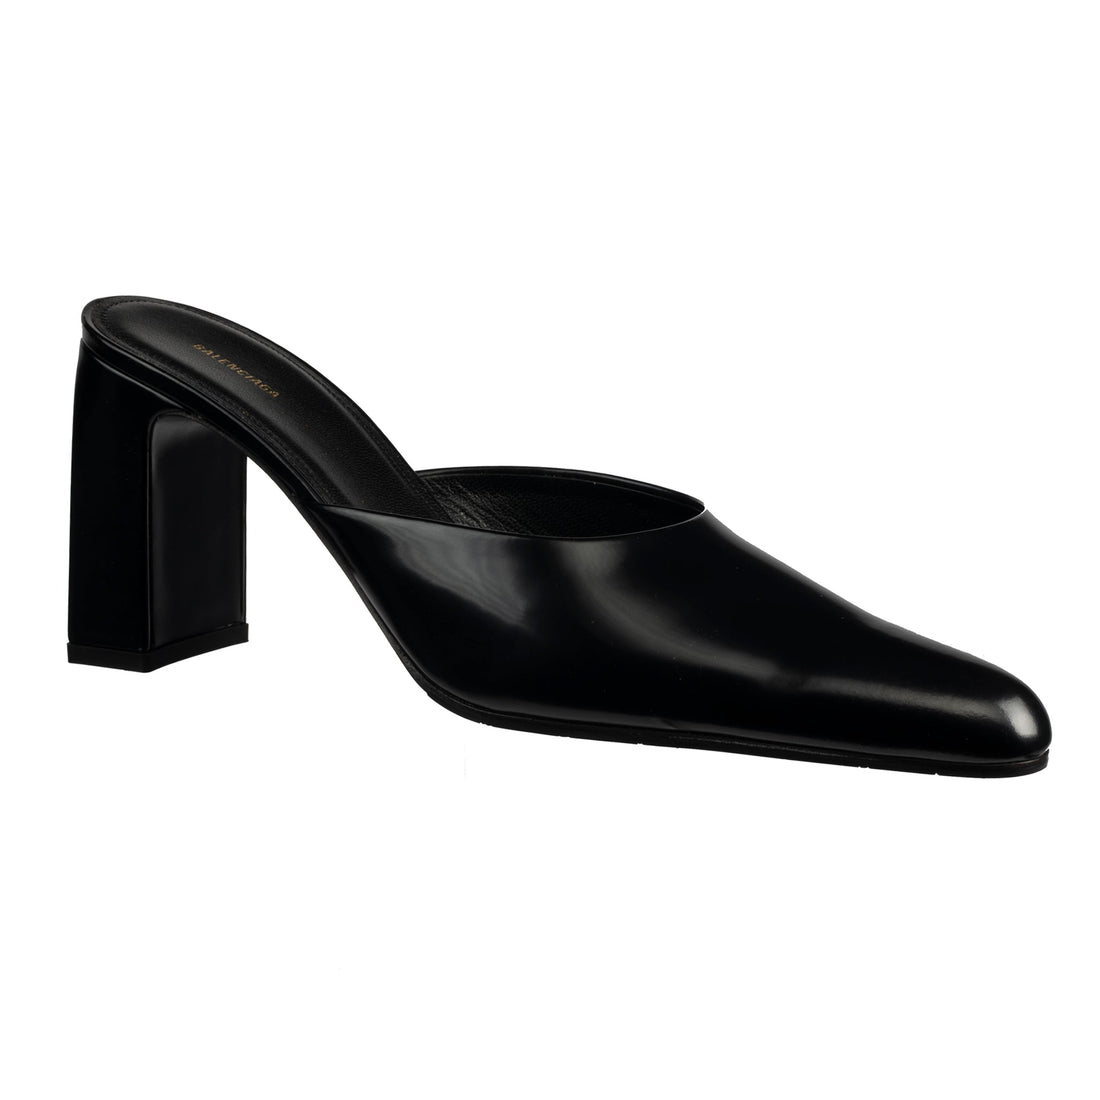 BALENCIAGA mules in nappa leather  Black  Balenciaga heeled sandals  722309WBCW1 online on GIGLIOCOM